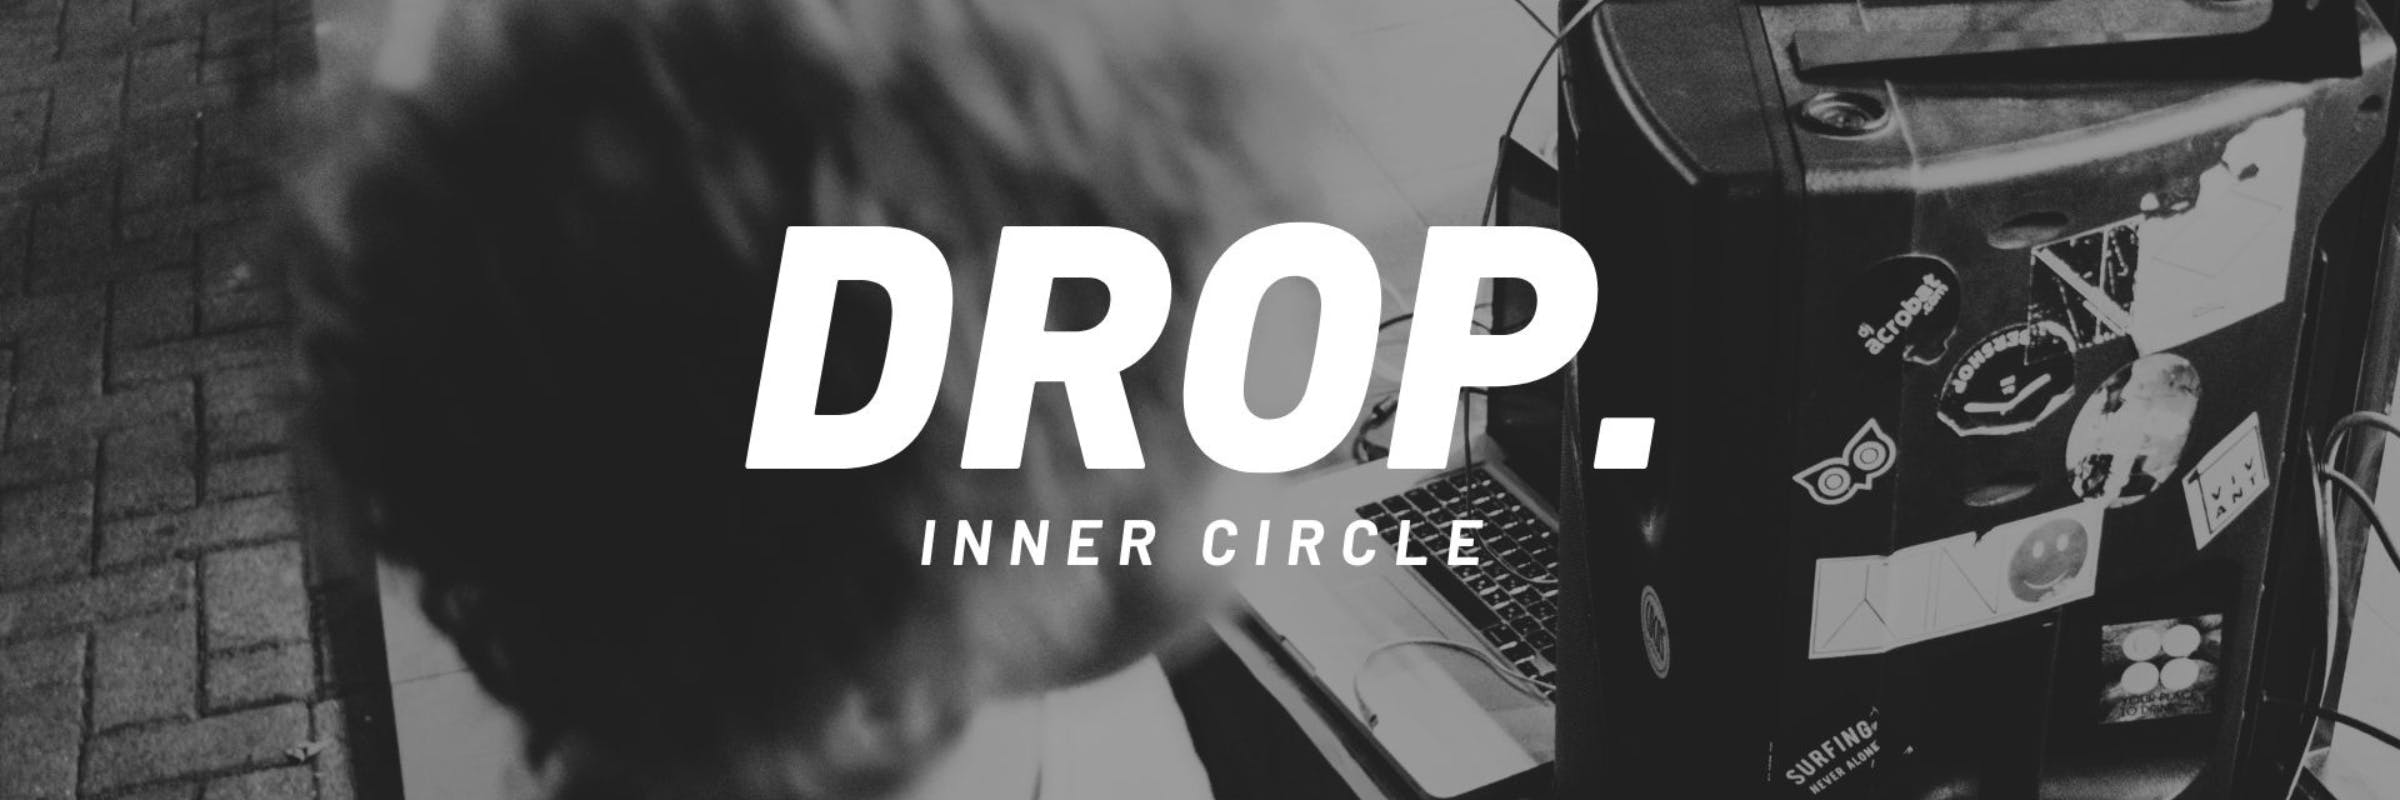 Introducing: Inner Circle